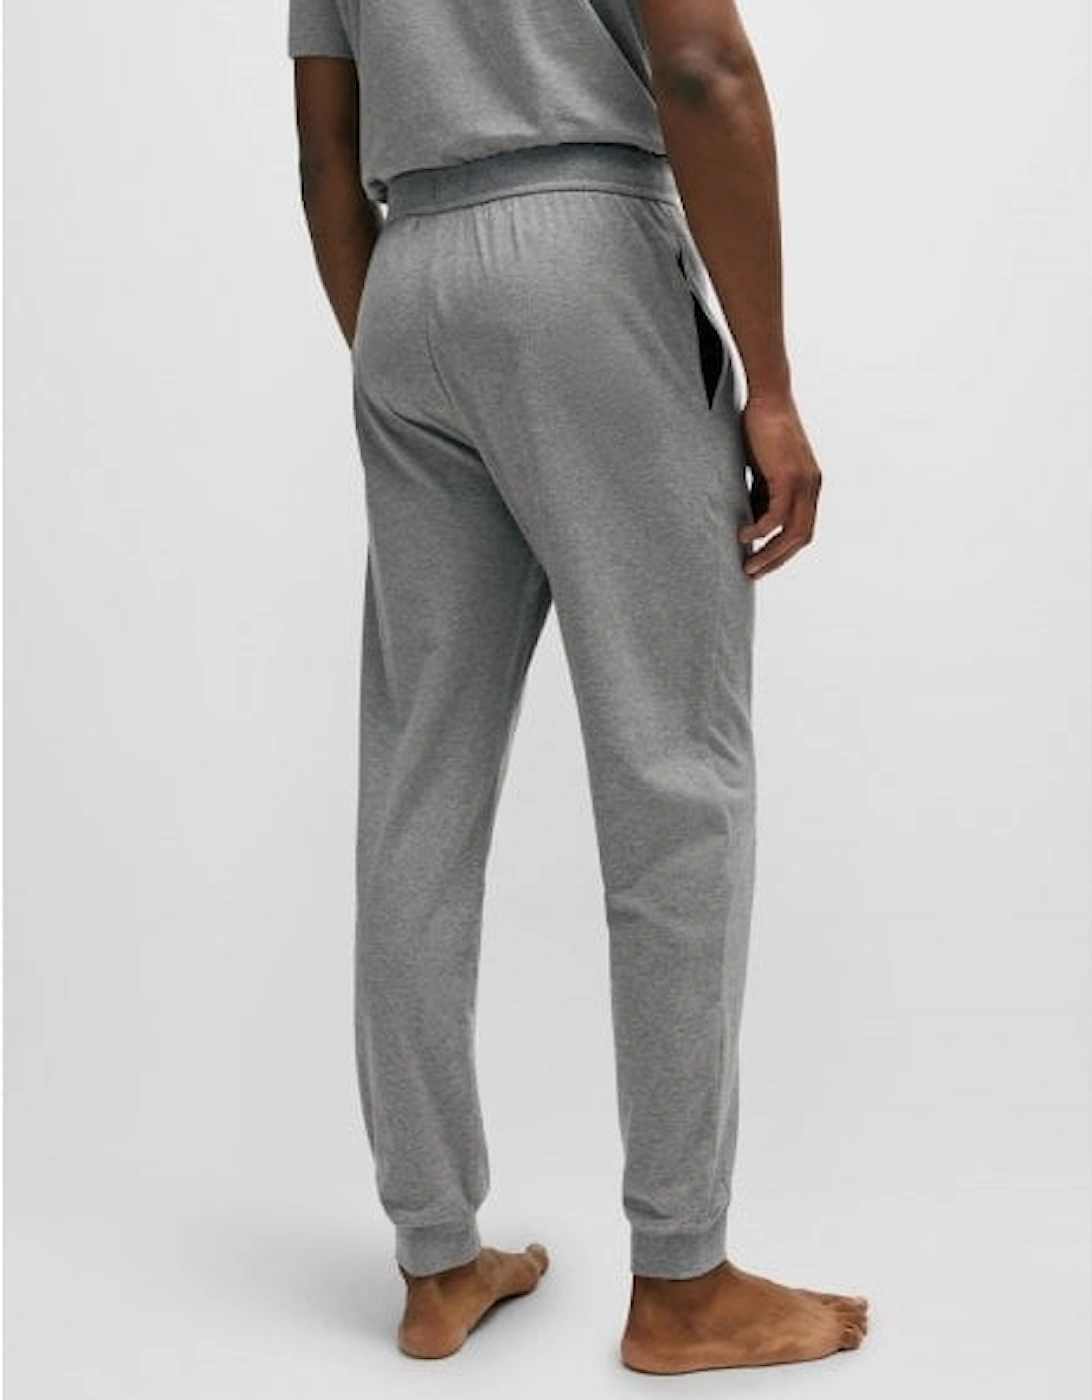 Mix & Match Loungewear Jogging Bottoms, Grey